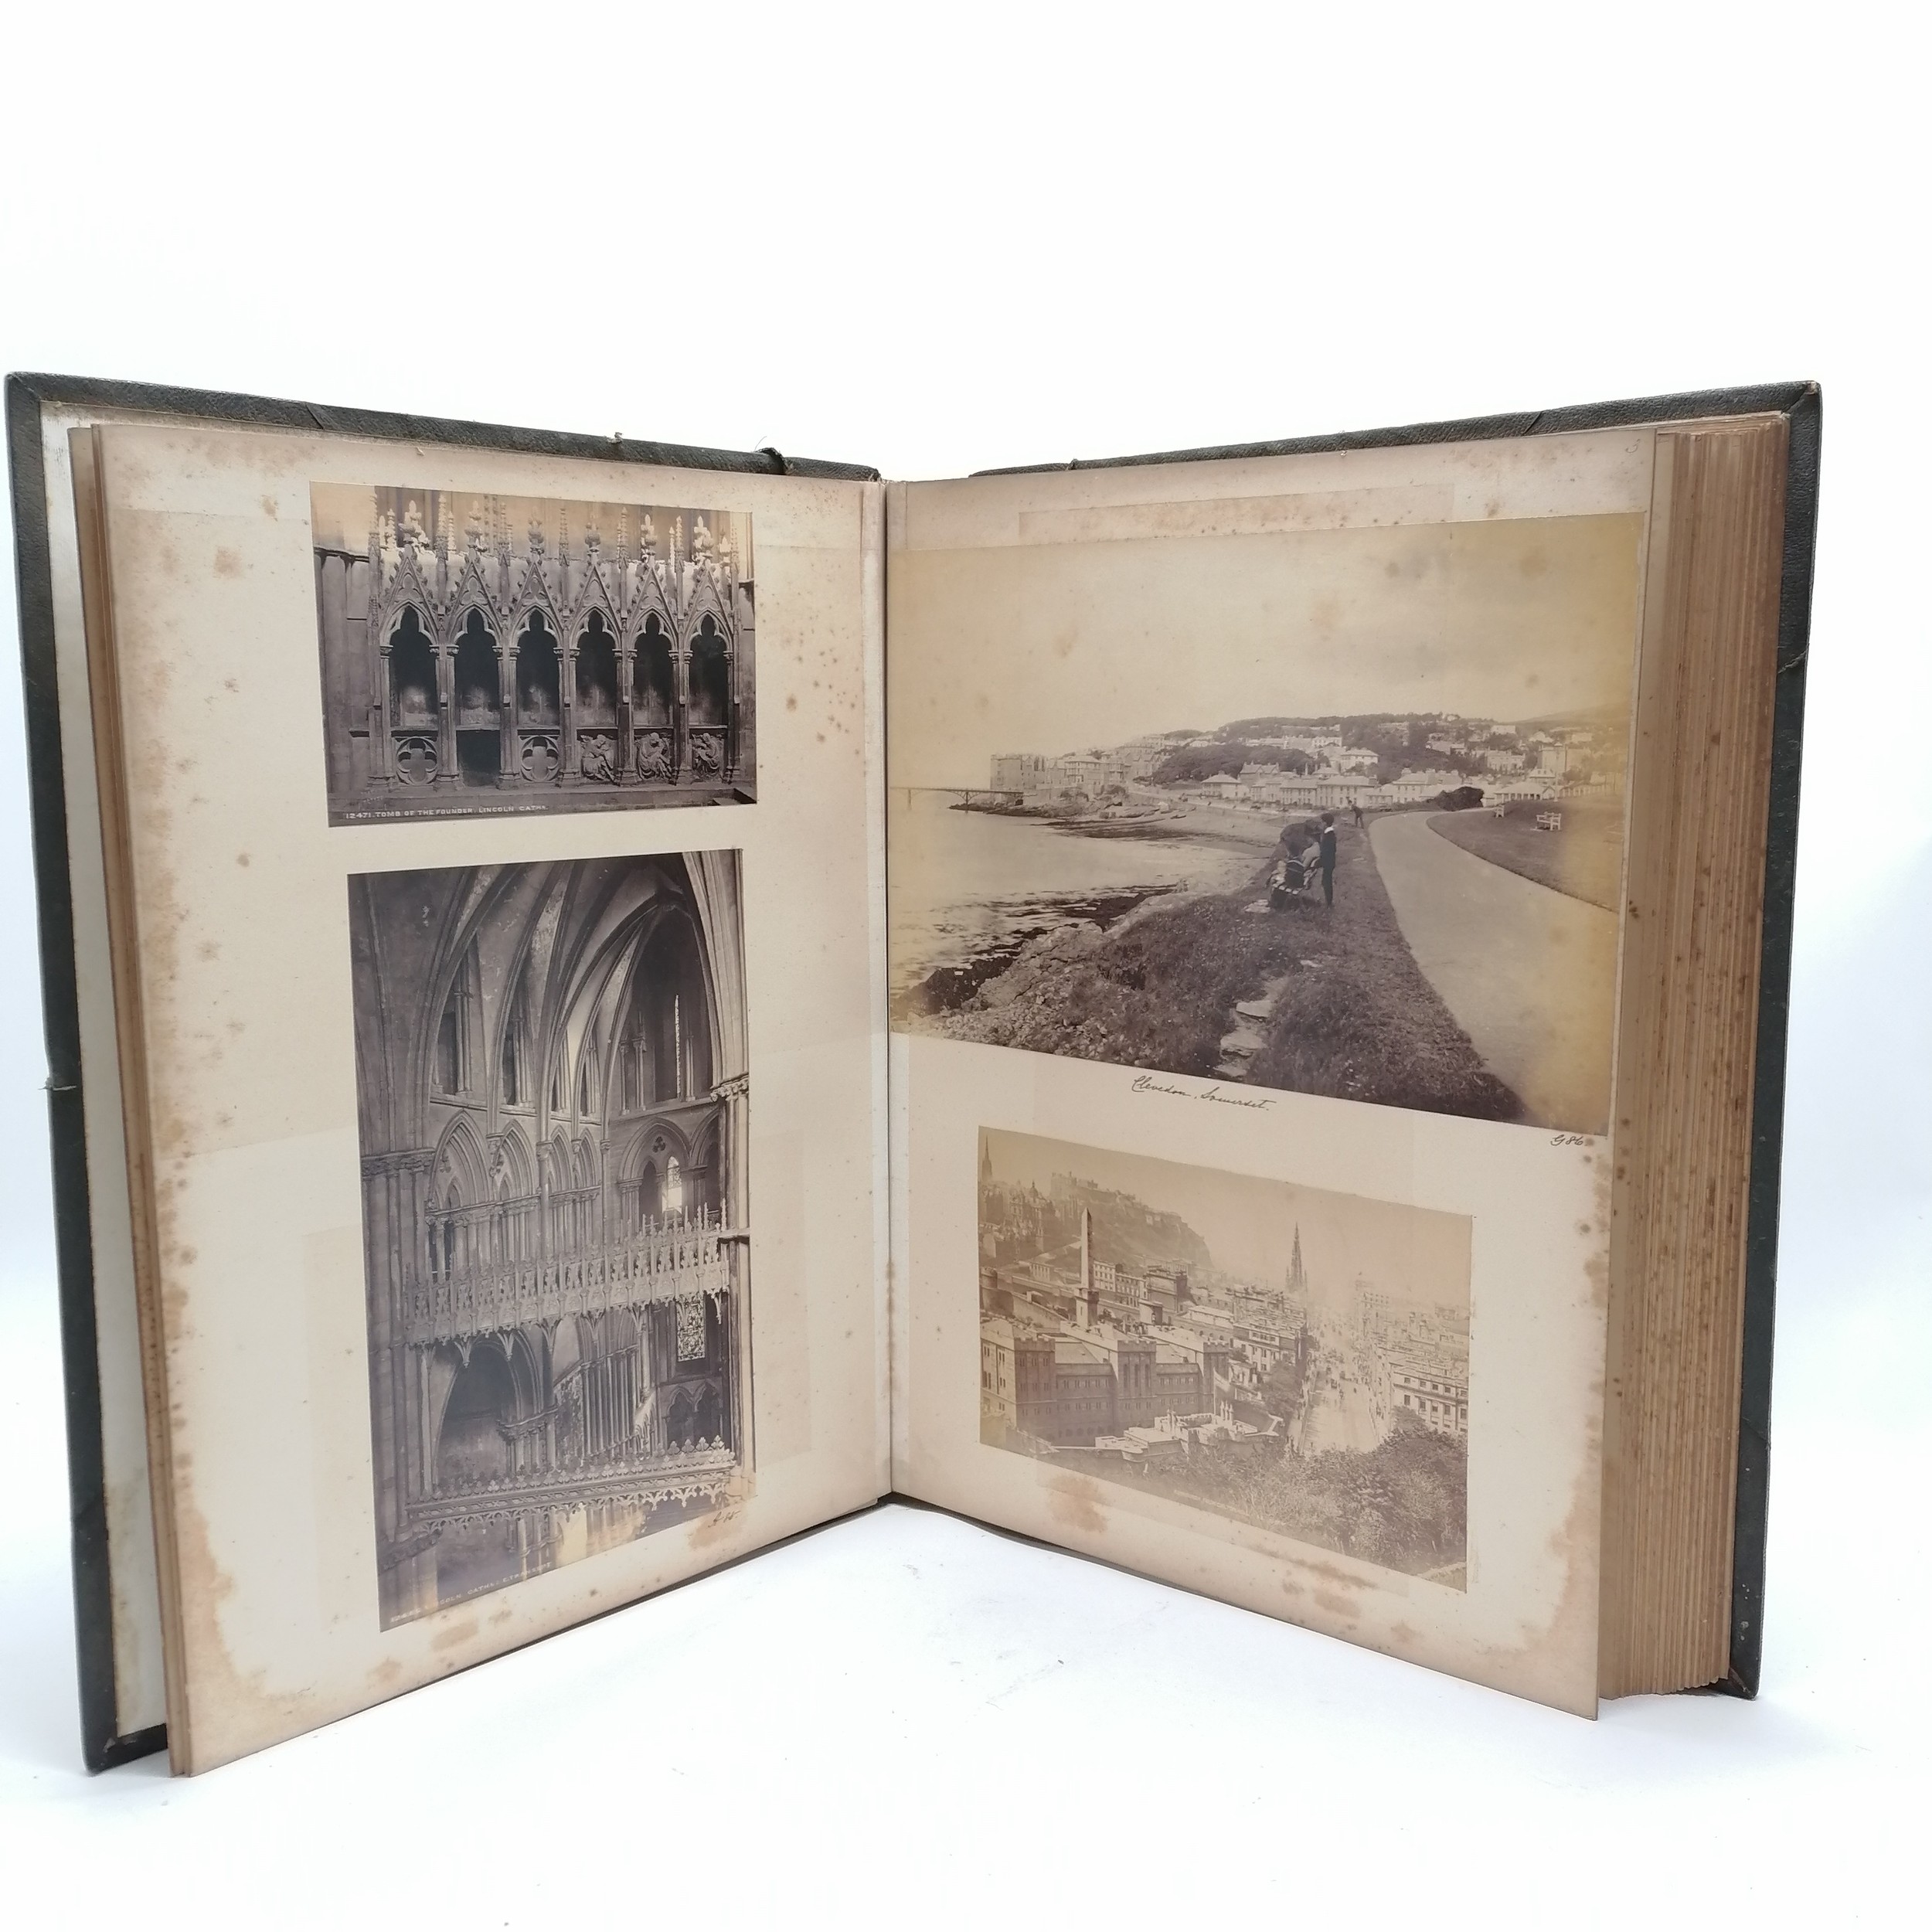 Large album of antique photographs with annotation inc Caledonian canal, castles etc - album, 43cm x - Image 8 of 11